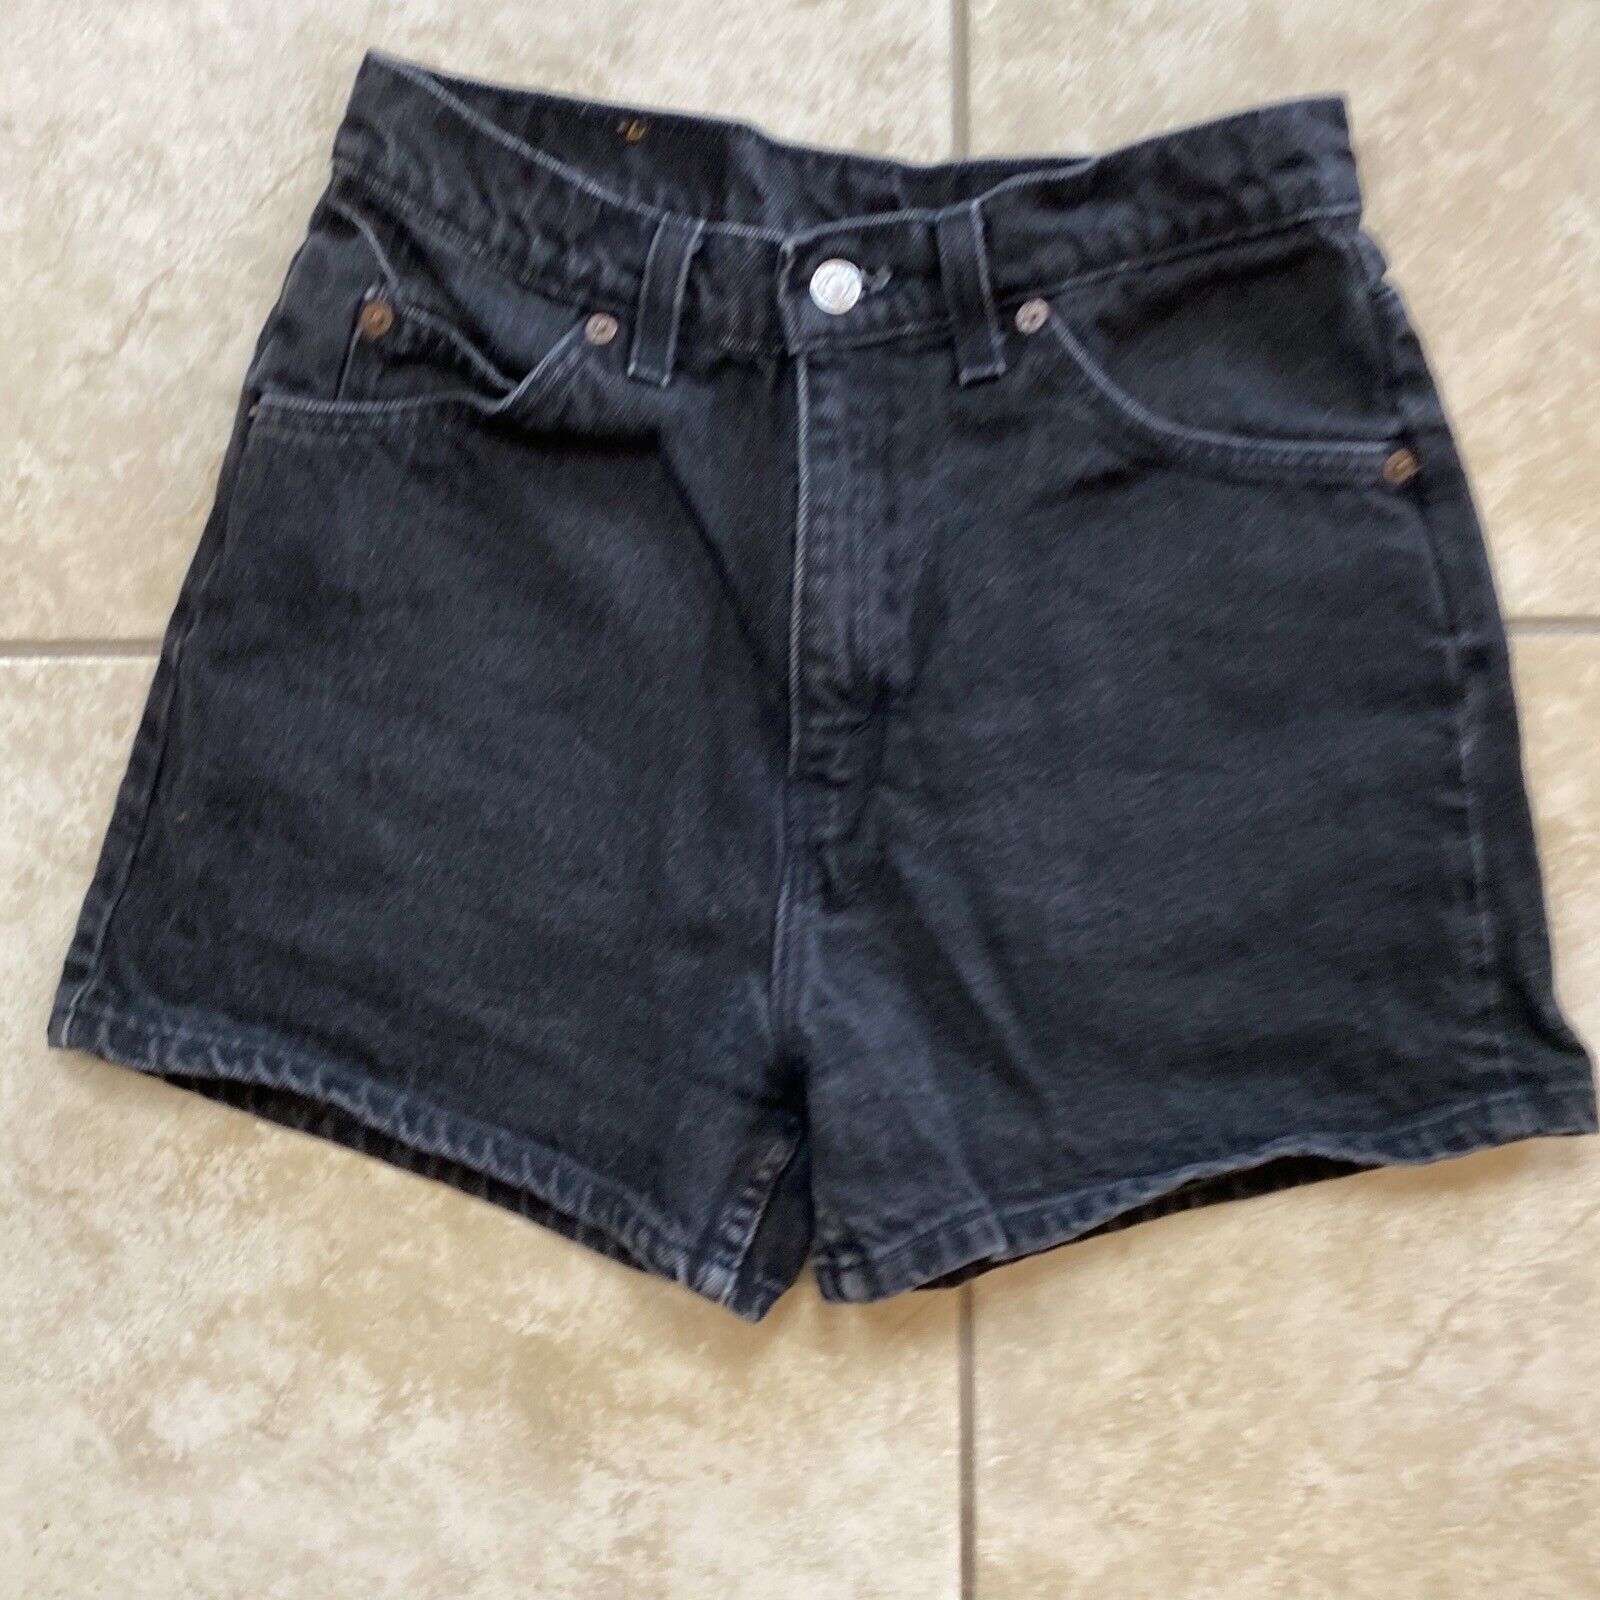 Levi's Levis 501 Denim Shorts for Women Waist 28 inches